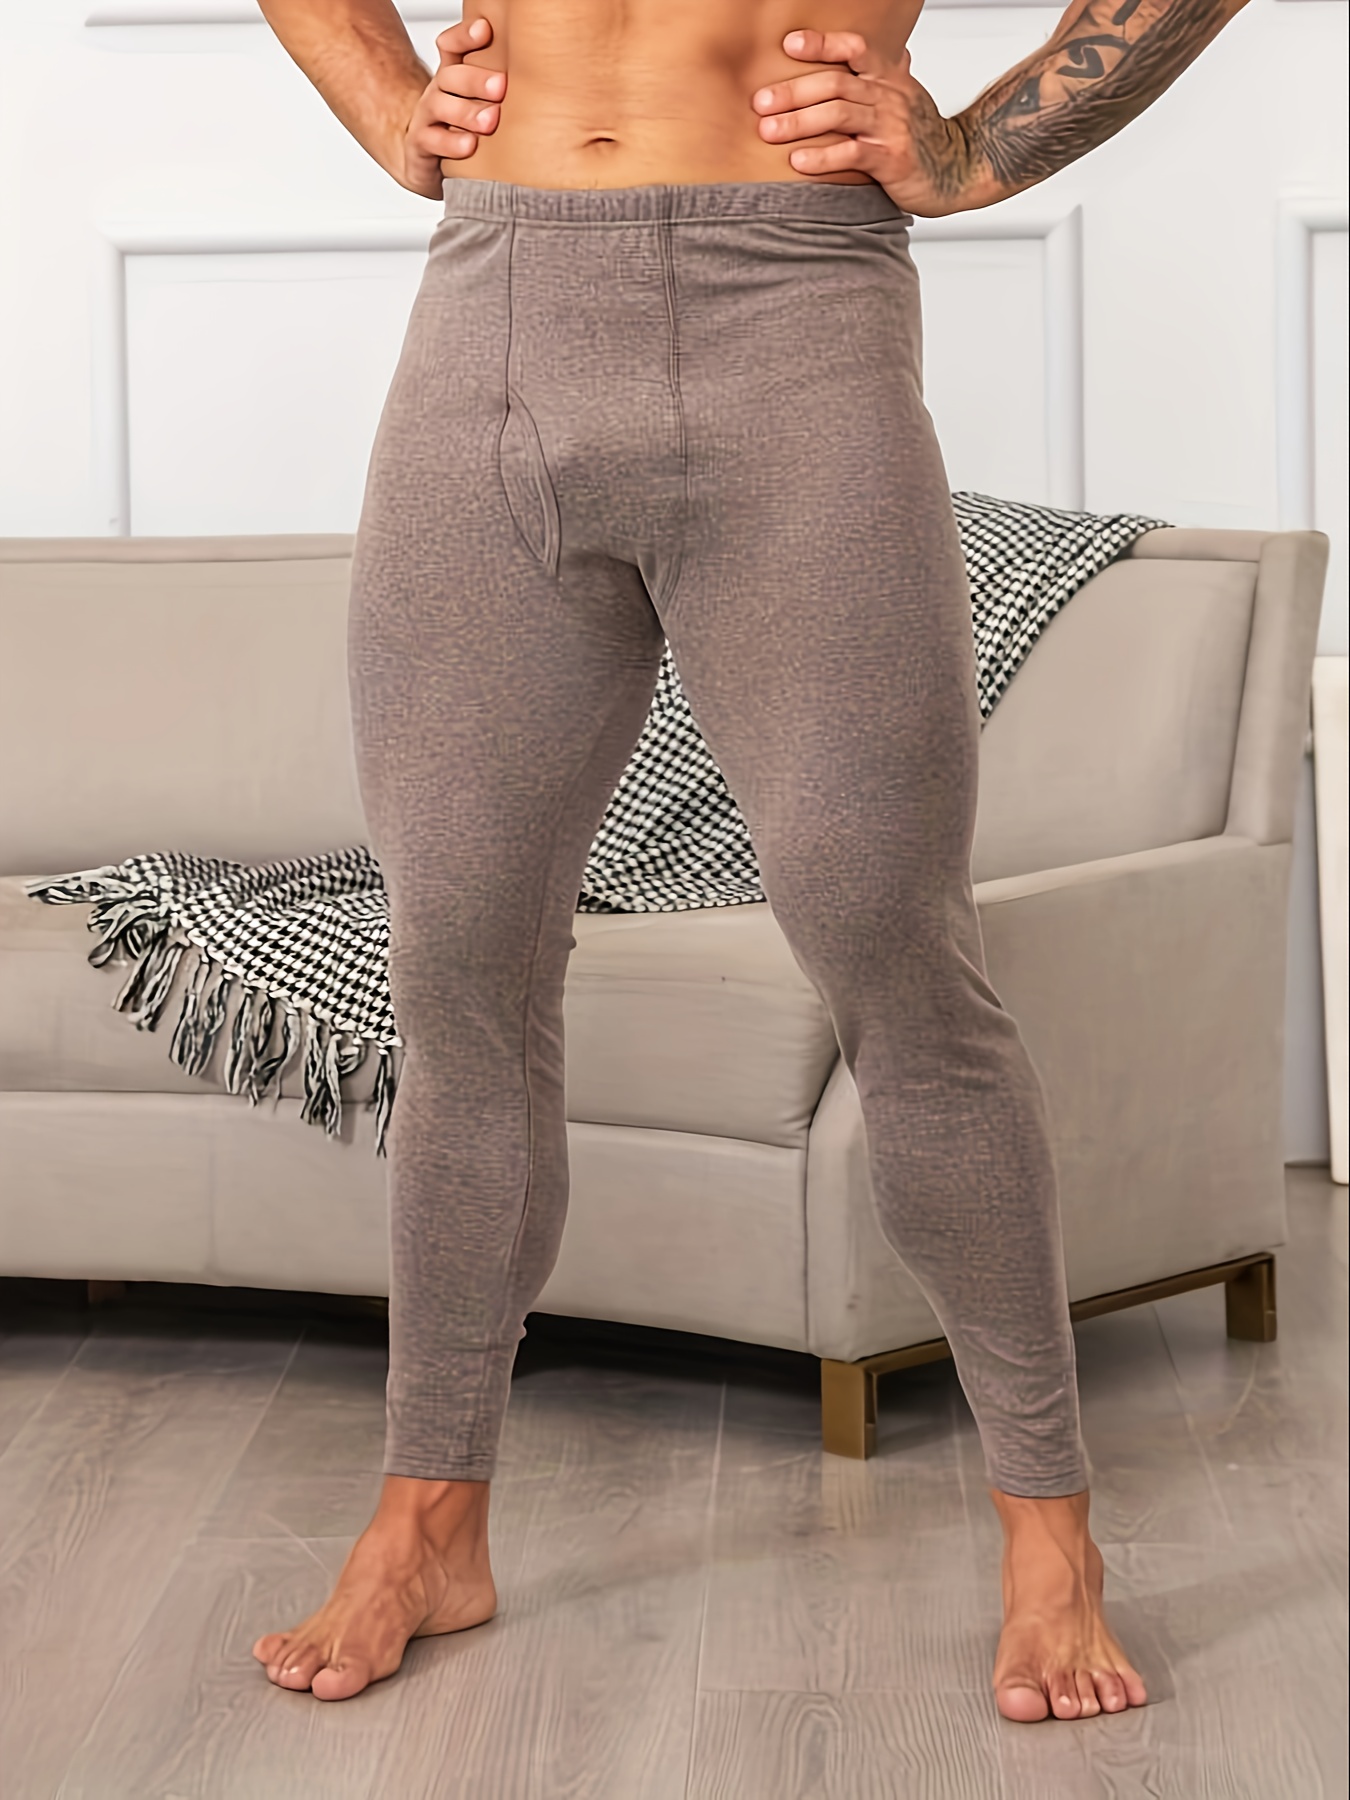 Men's Thermal Underwear Pants Premium Long Fleece Lined Base